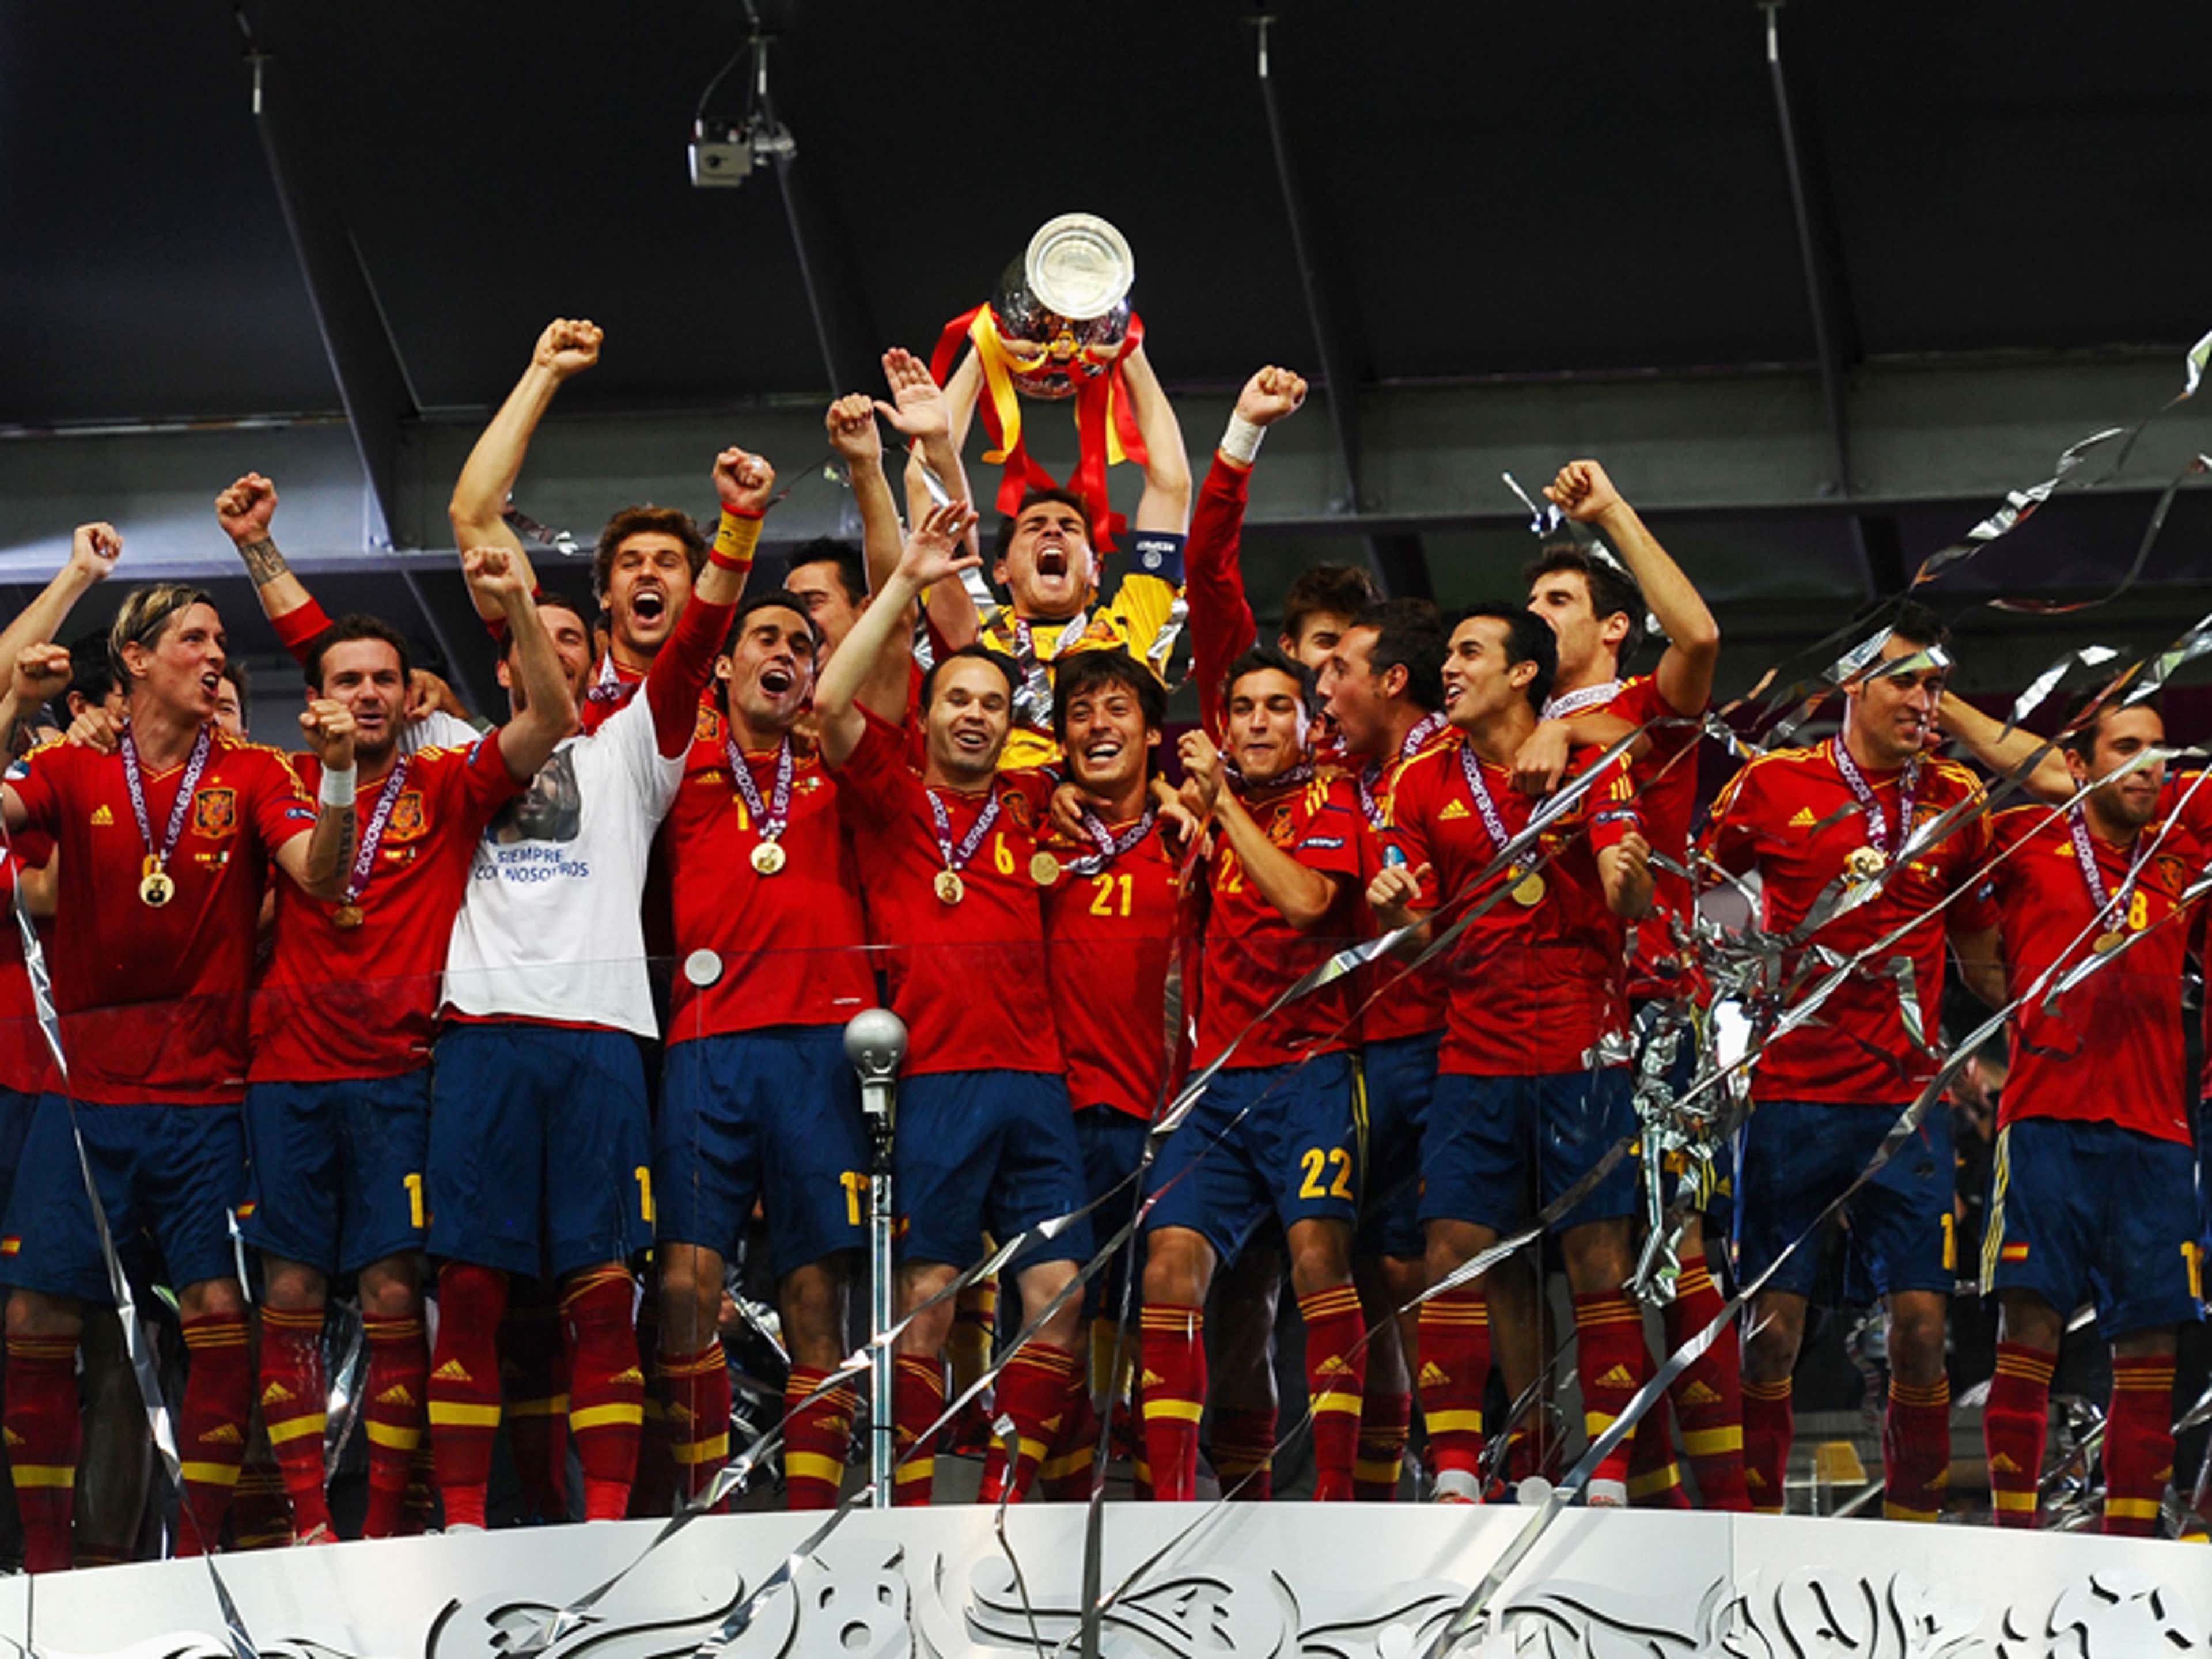 Euro Championship 2012